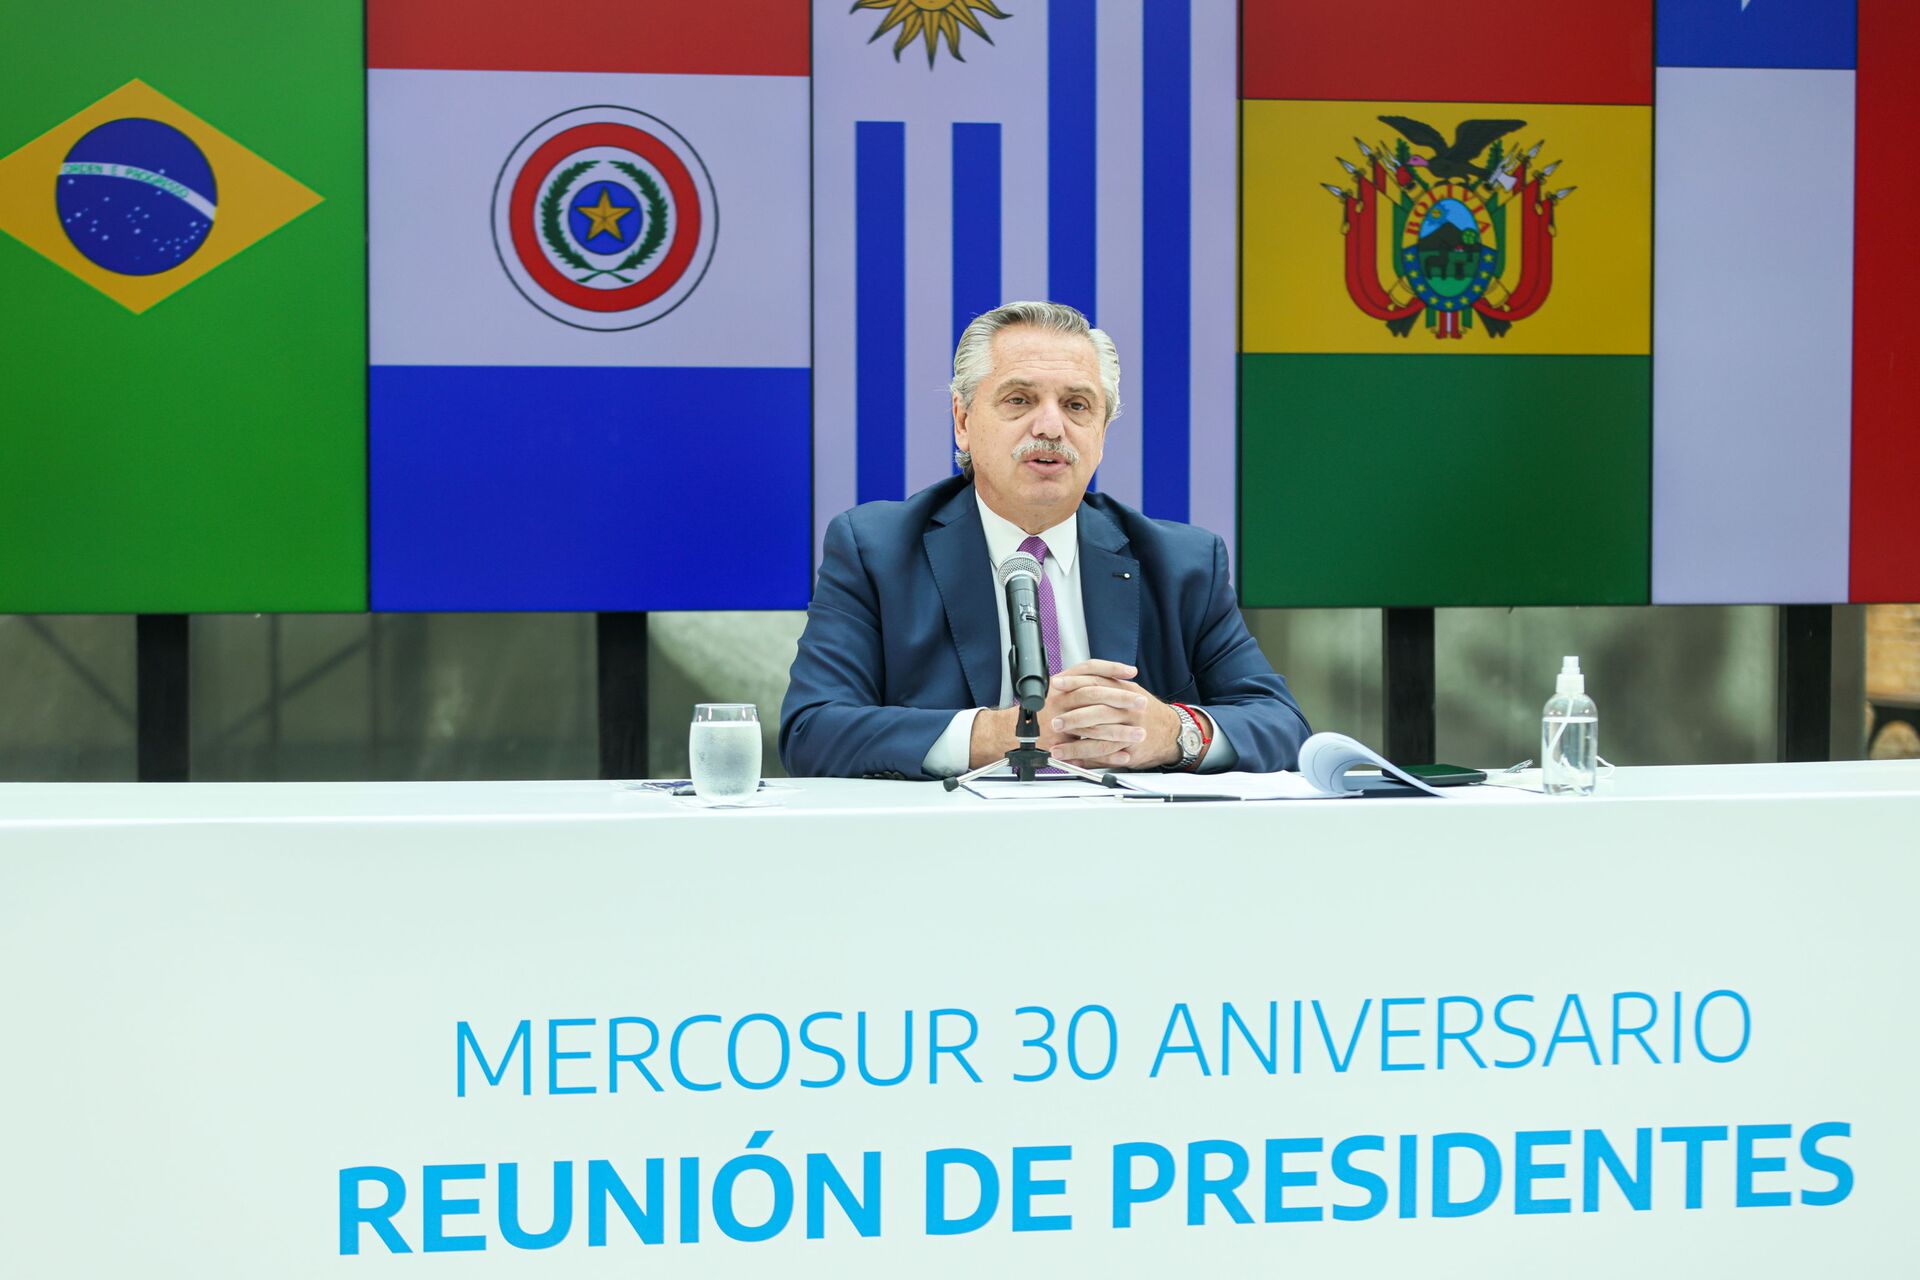 O presidente argentino Alberto Fernández participa da cúpula virtual de 30 anos do Mercosul - Sputnik Brasil, 1920, 16.02.2022